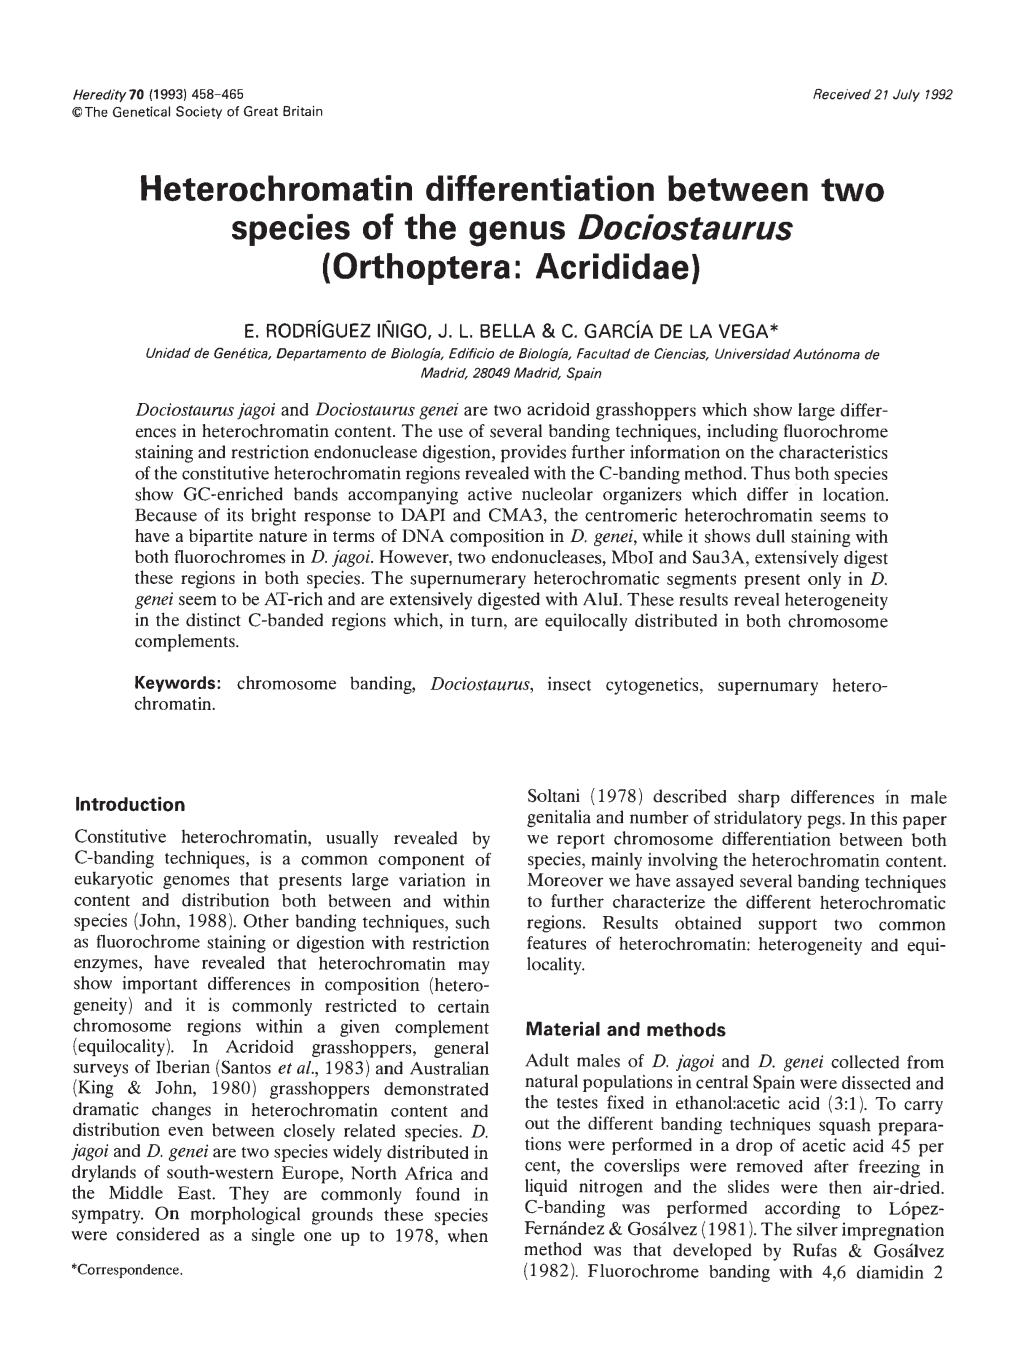 Heterochromatin Differentiation Between Two Species of the Genus Dociostaurus (Orthoptera: Acrididae)